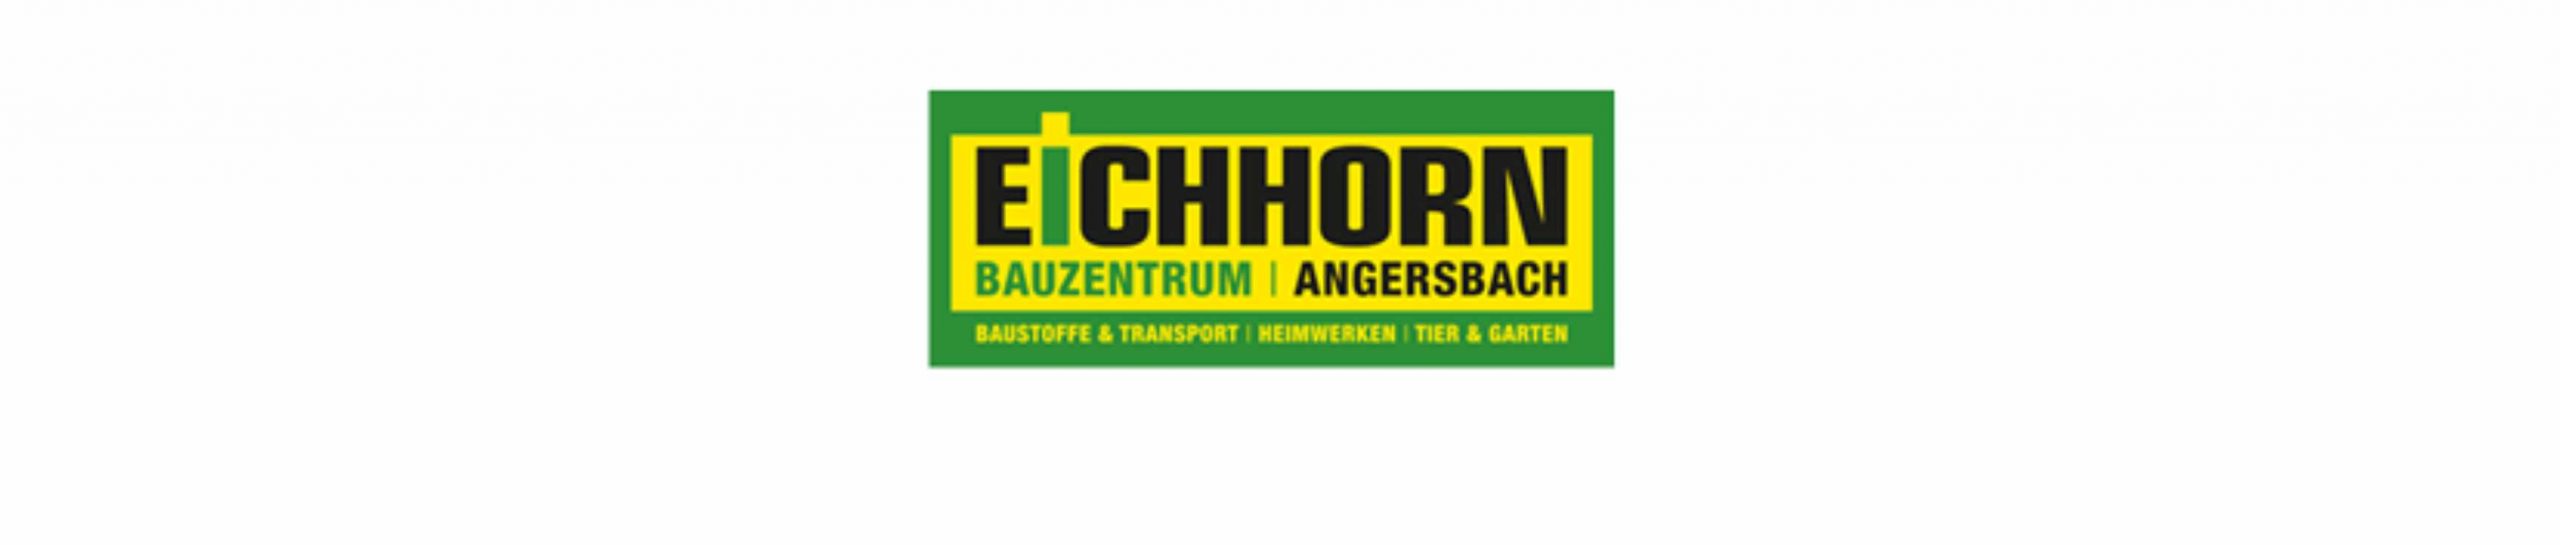 Eichhorn AG Bauzentrum - Angersbach